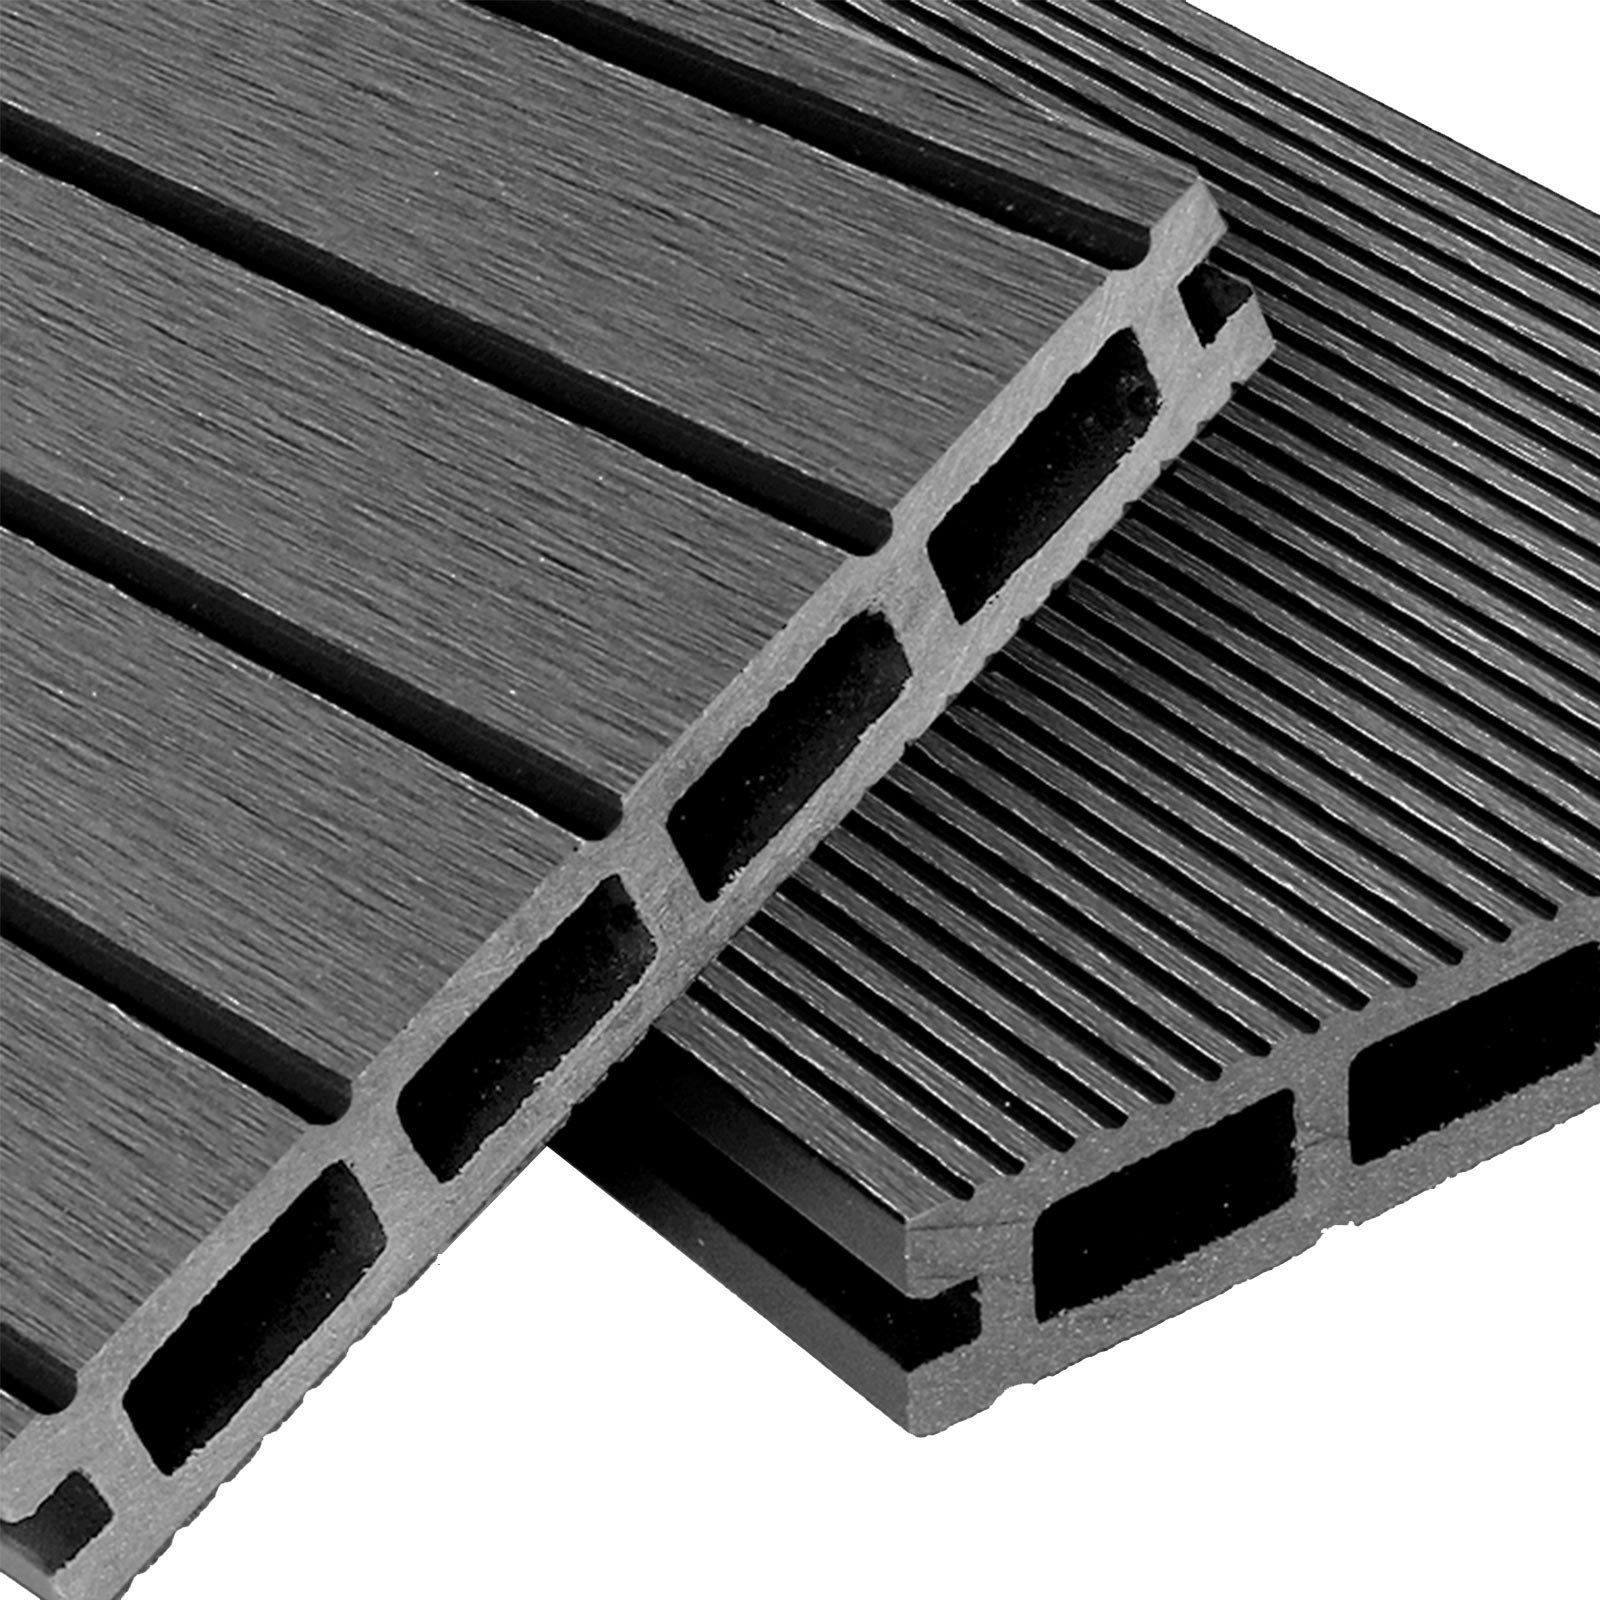 WPC Terrassendielen Basic Line - Komplett-Set hellgrau | 28m² (4m x 7m) Holz-Brett Dielen | Boden-Fliesen + Unterkonstruktion & Clips | Balkon Boden-Belag + rutschfest + witterungsbeständig